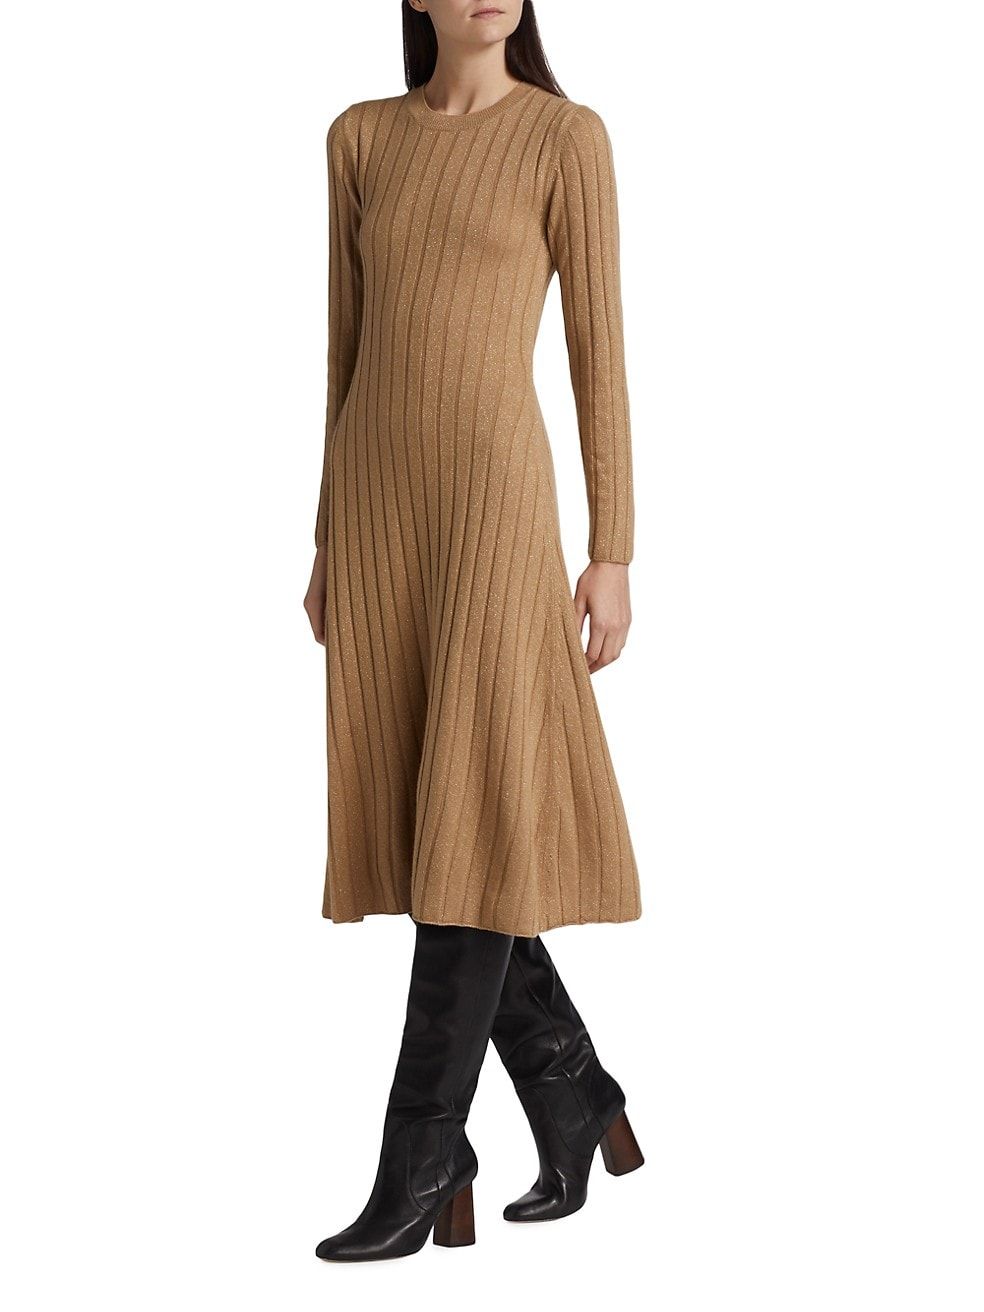 COLLECTION Shine Metallic Sweaterdress | Saks Fifth Avenue